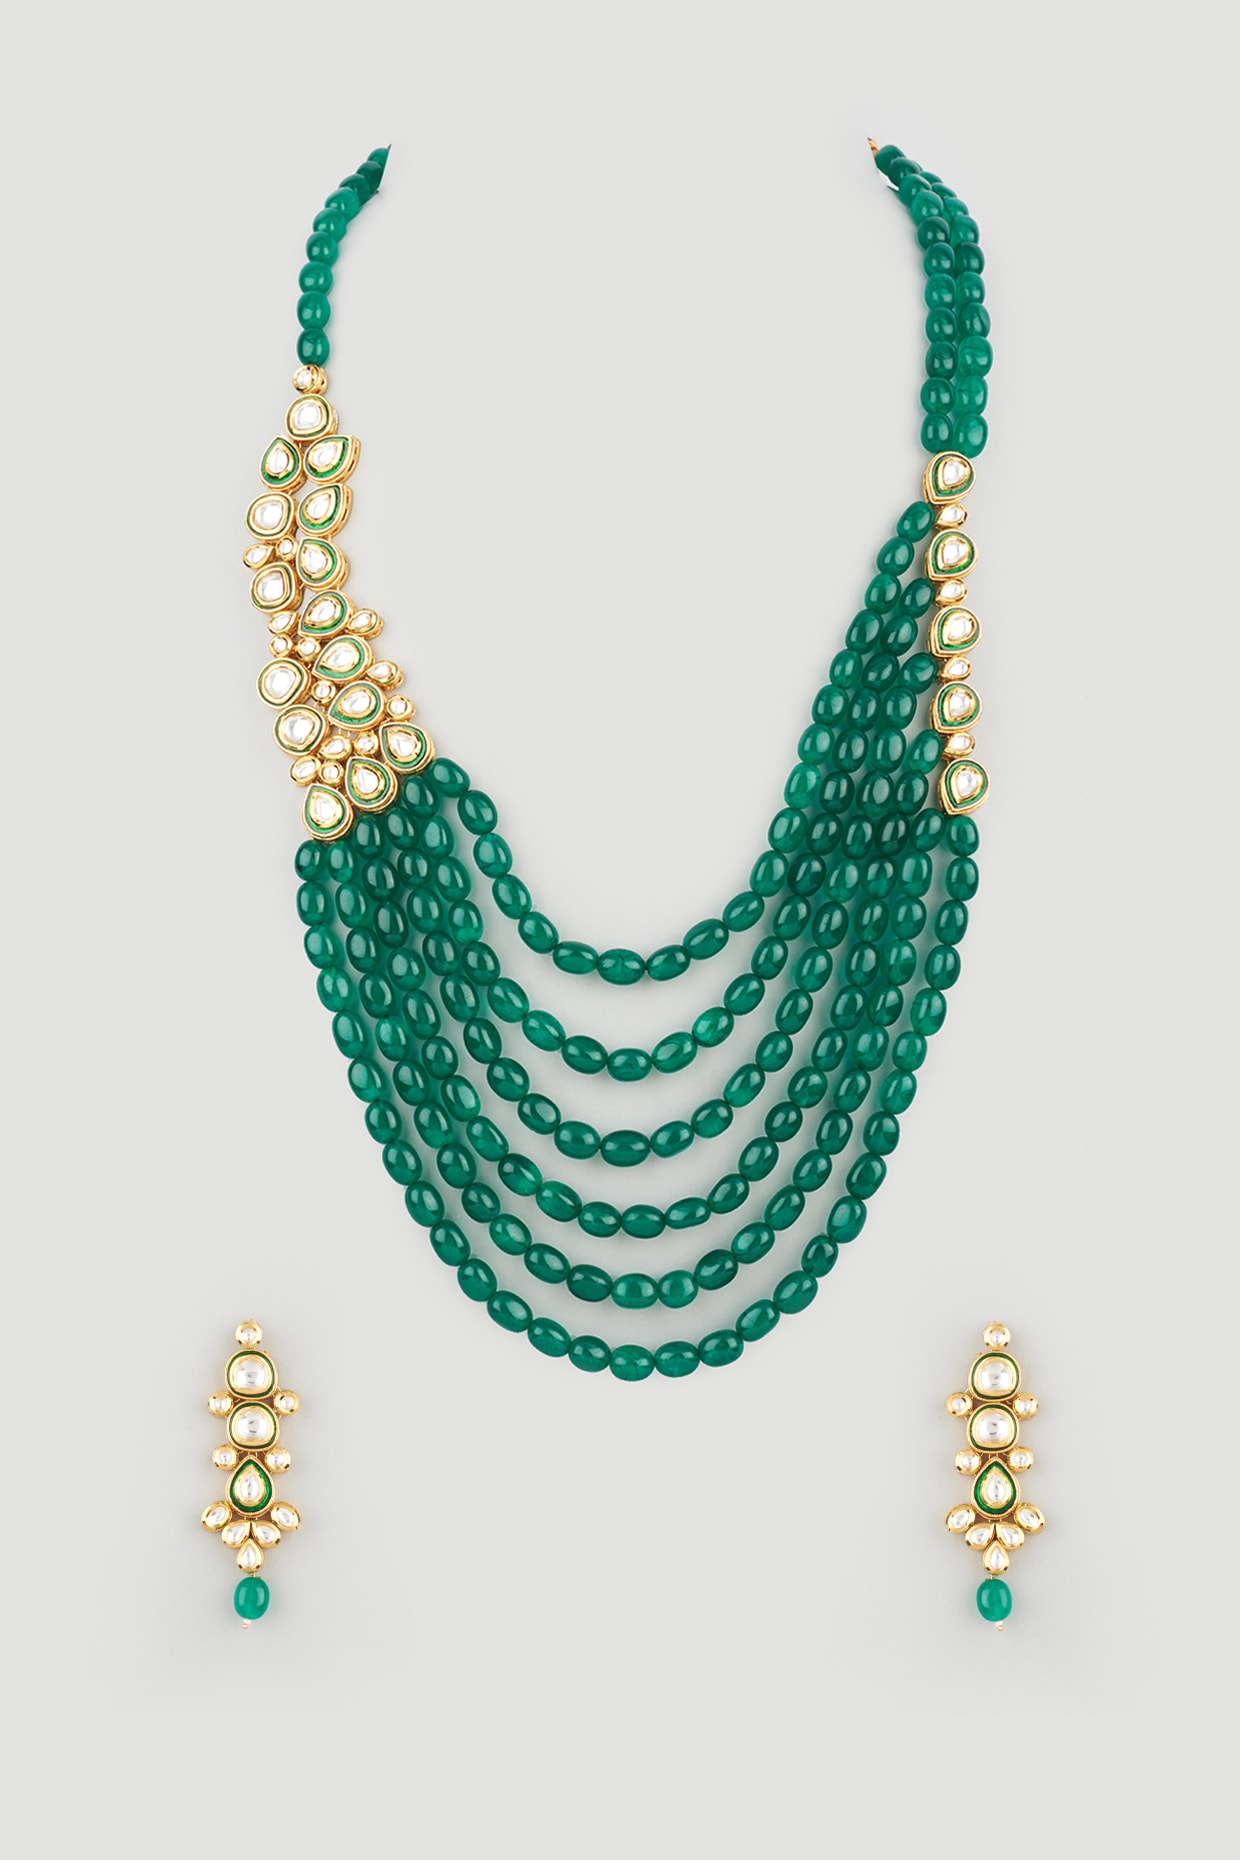 Buy Kundan Necklace Set Online at Glamourental USA